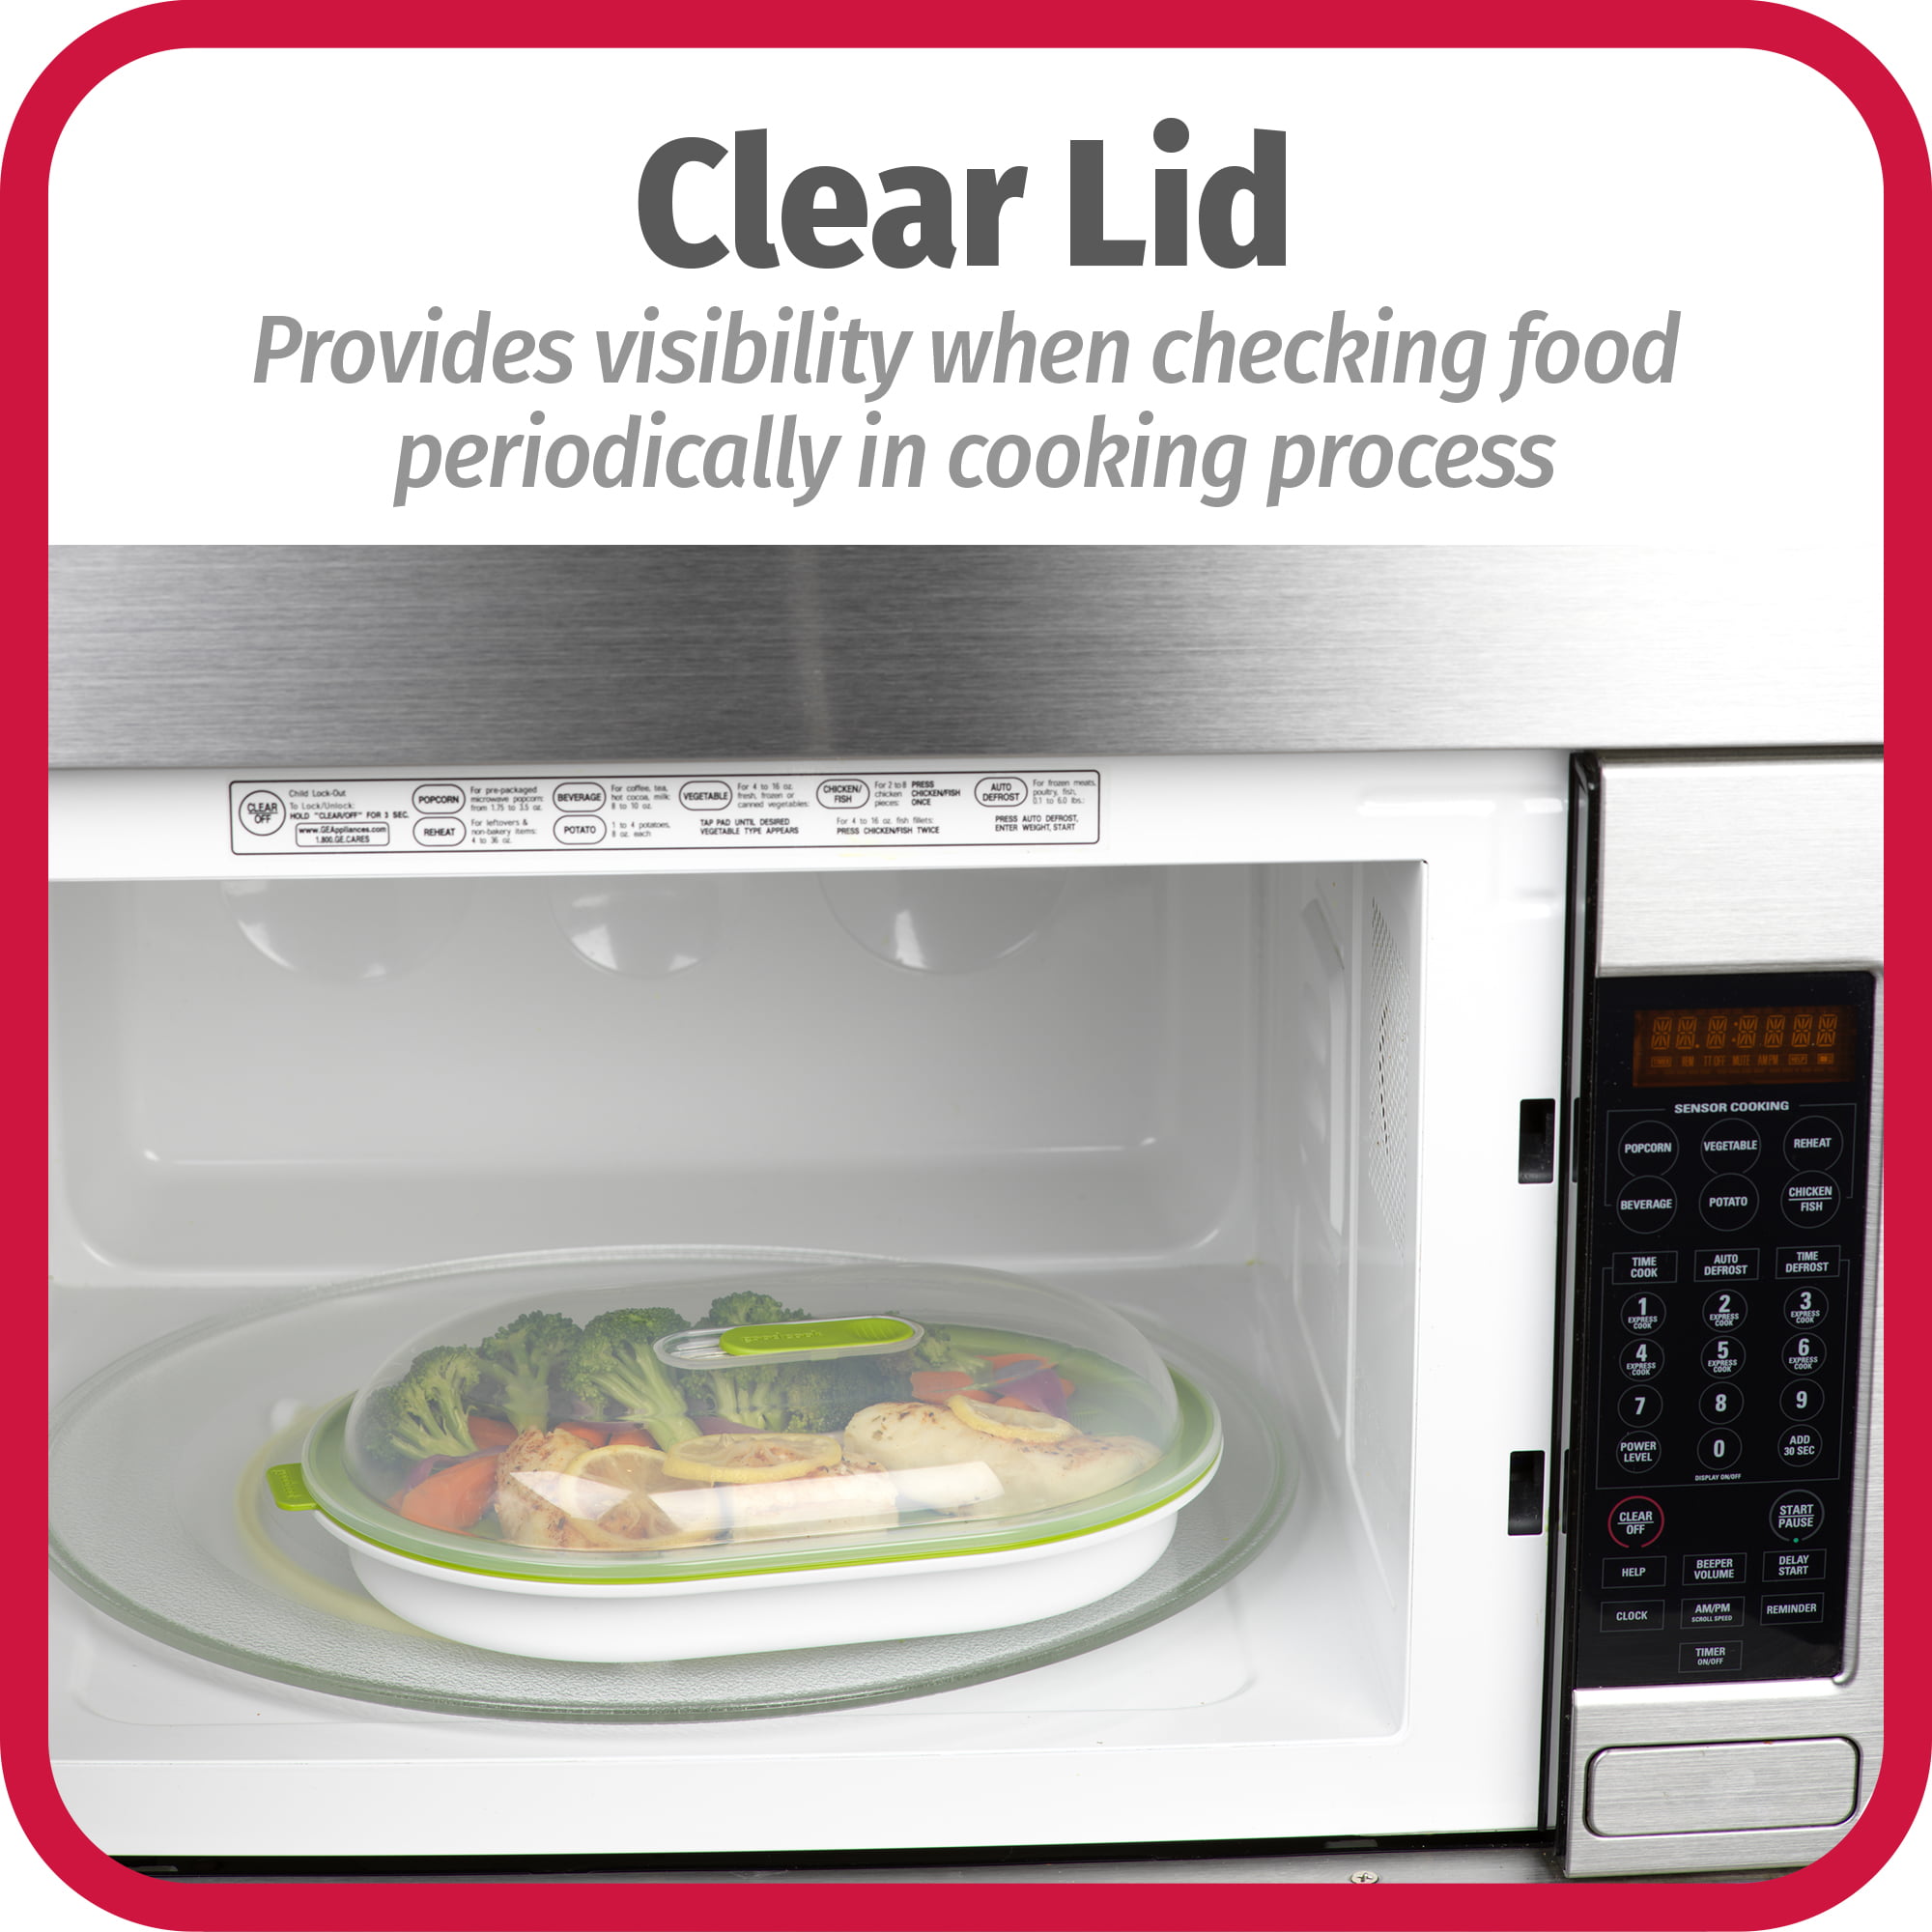 Microwave Glass Food Steamer, Microwavable Vegetable Steamer –  GlassConscious